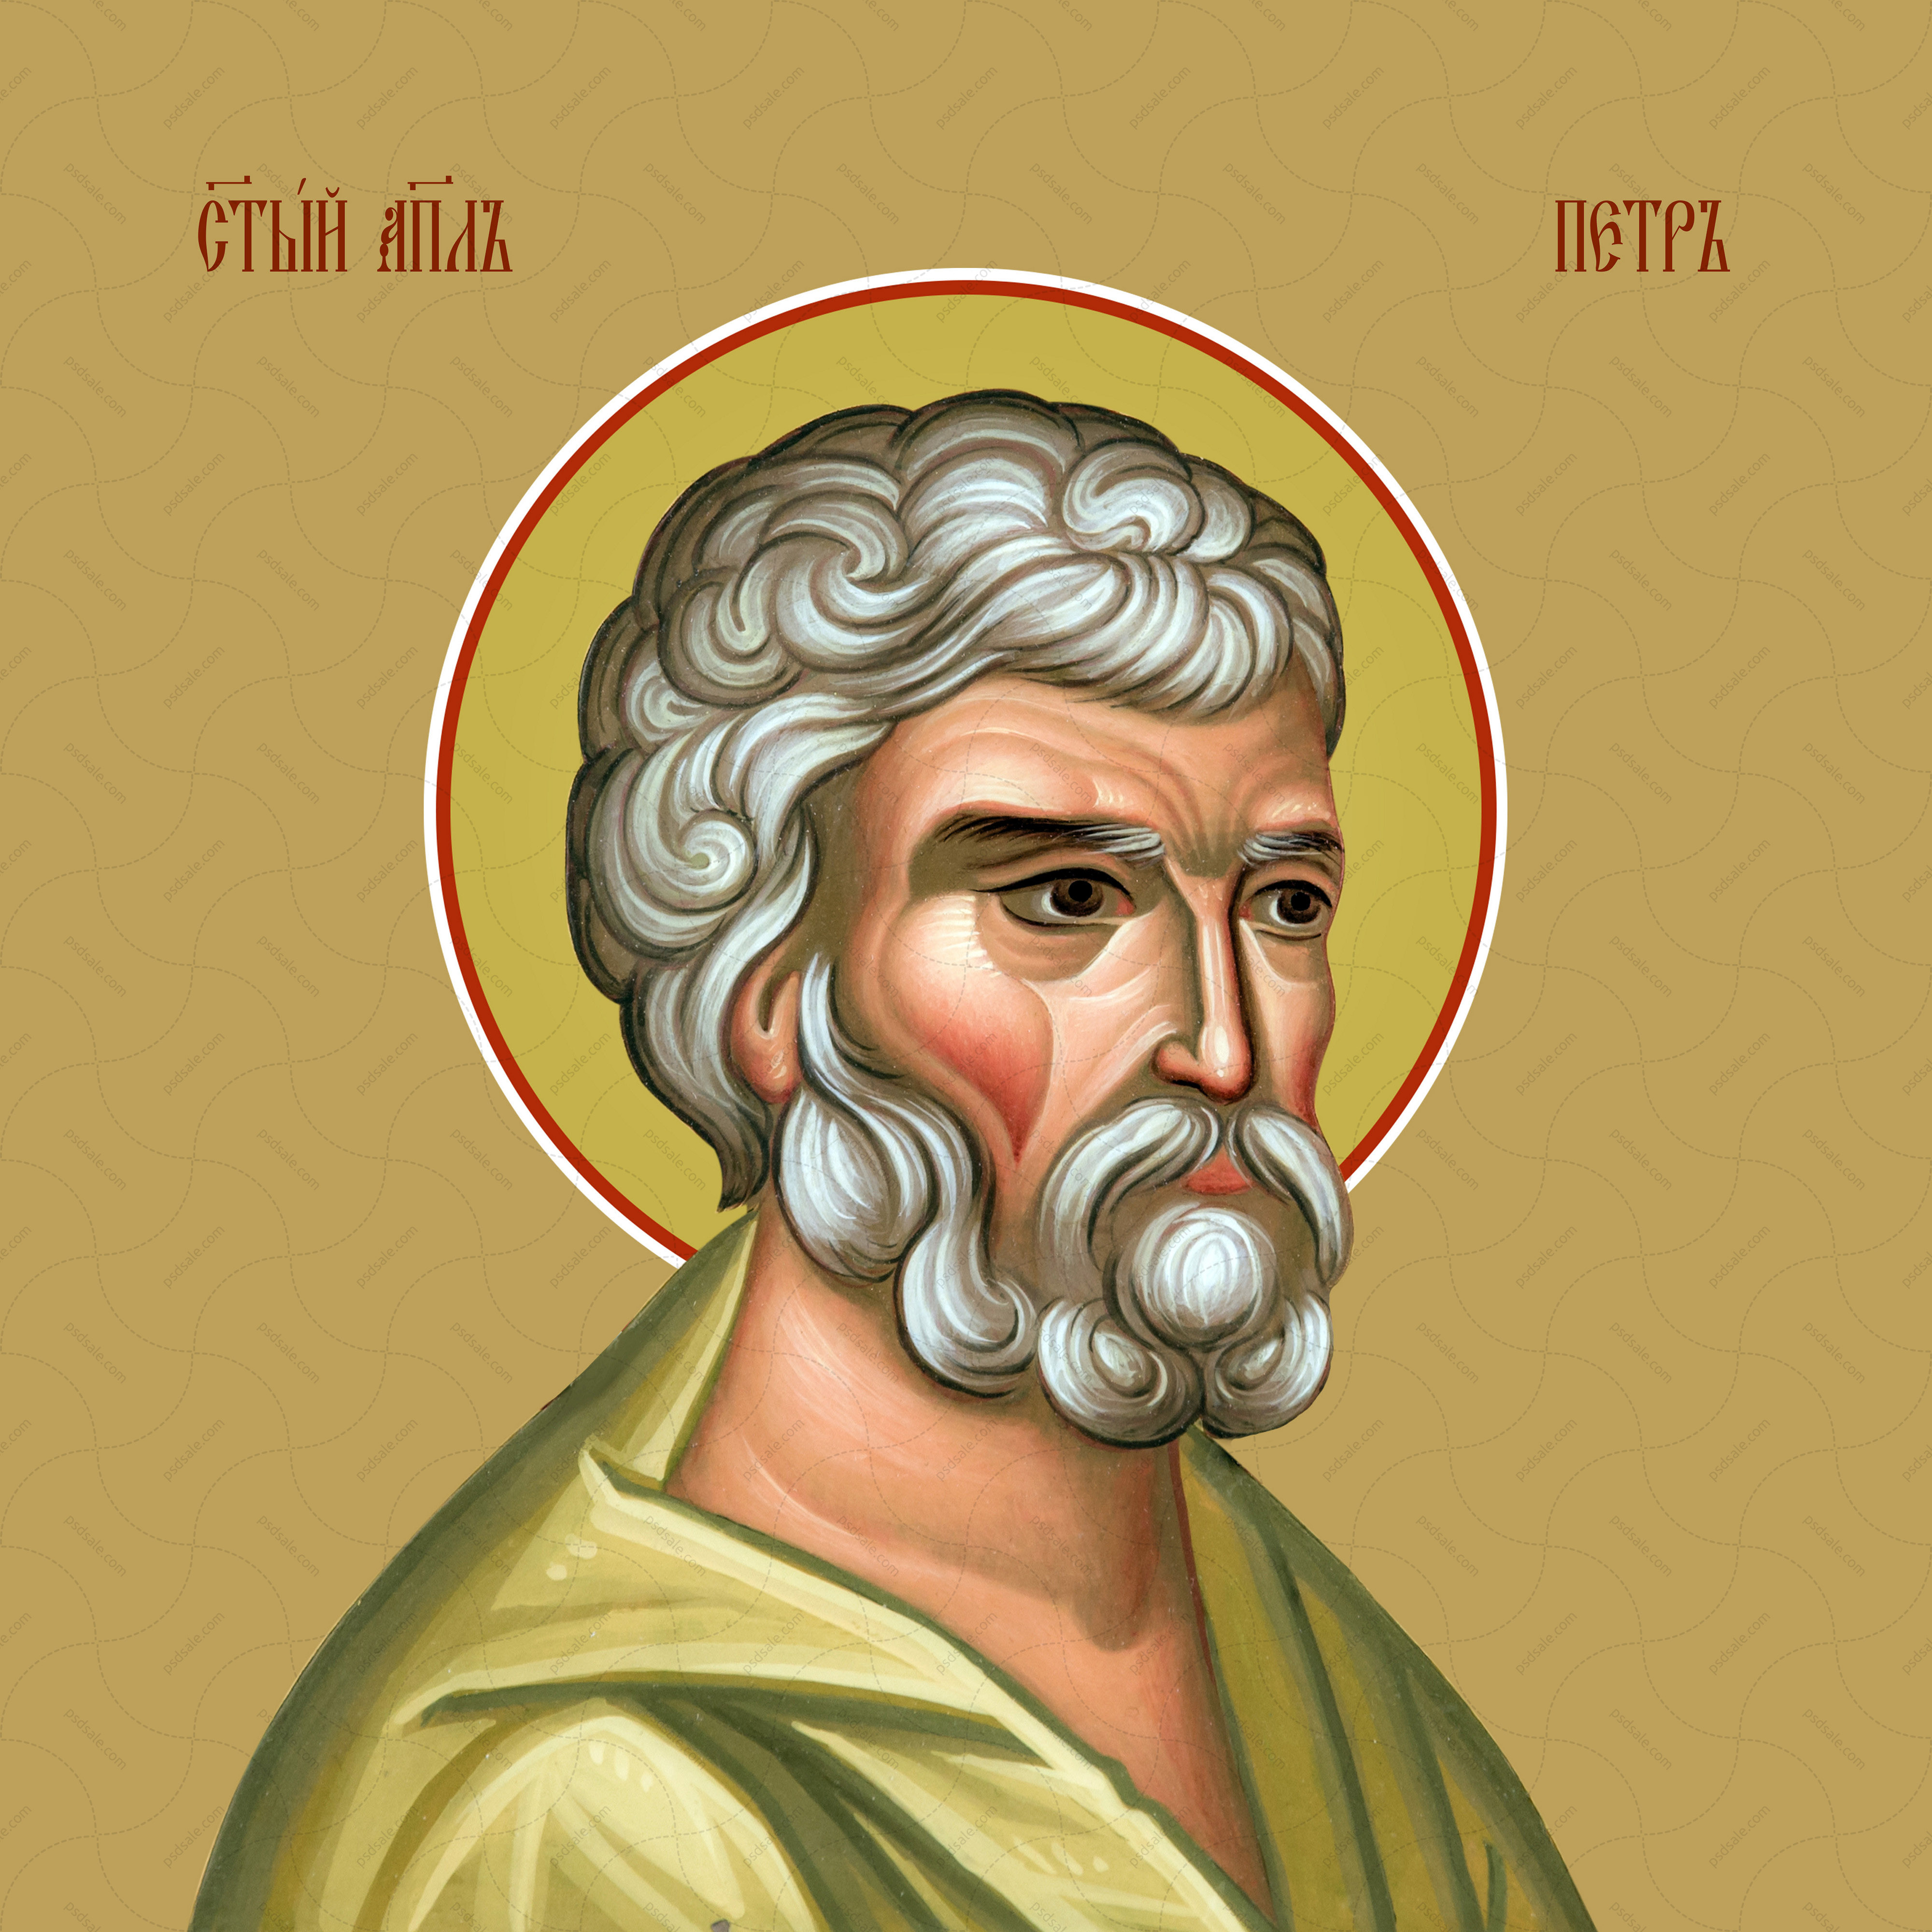 Петро, апостол